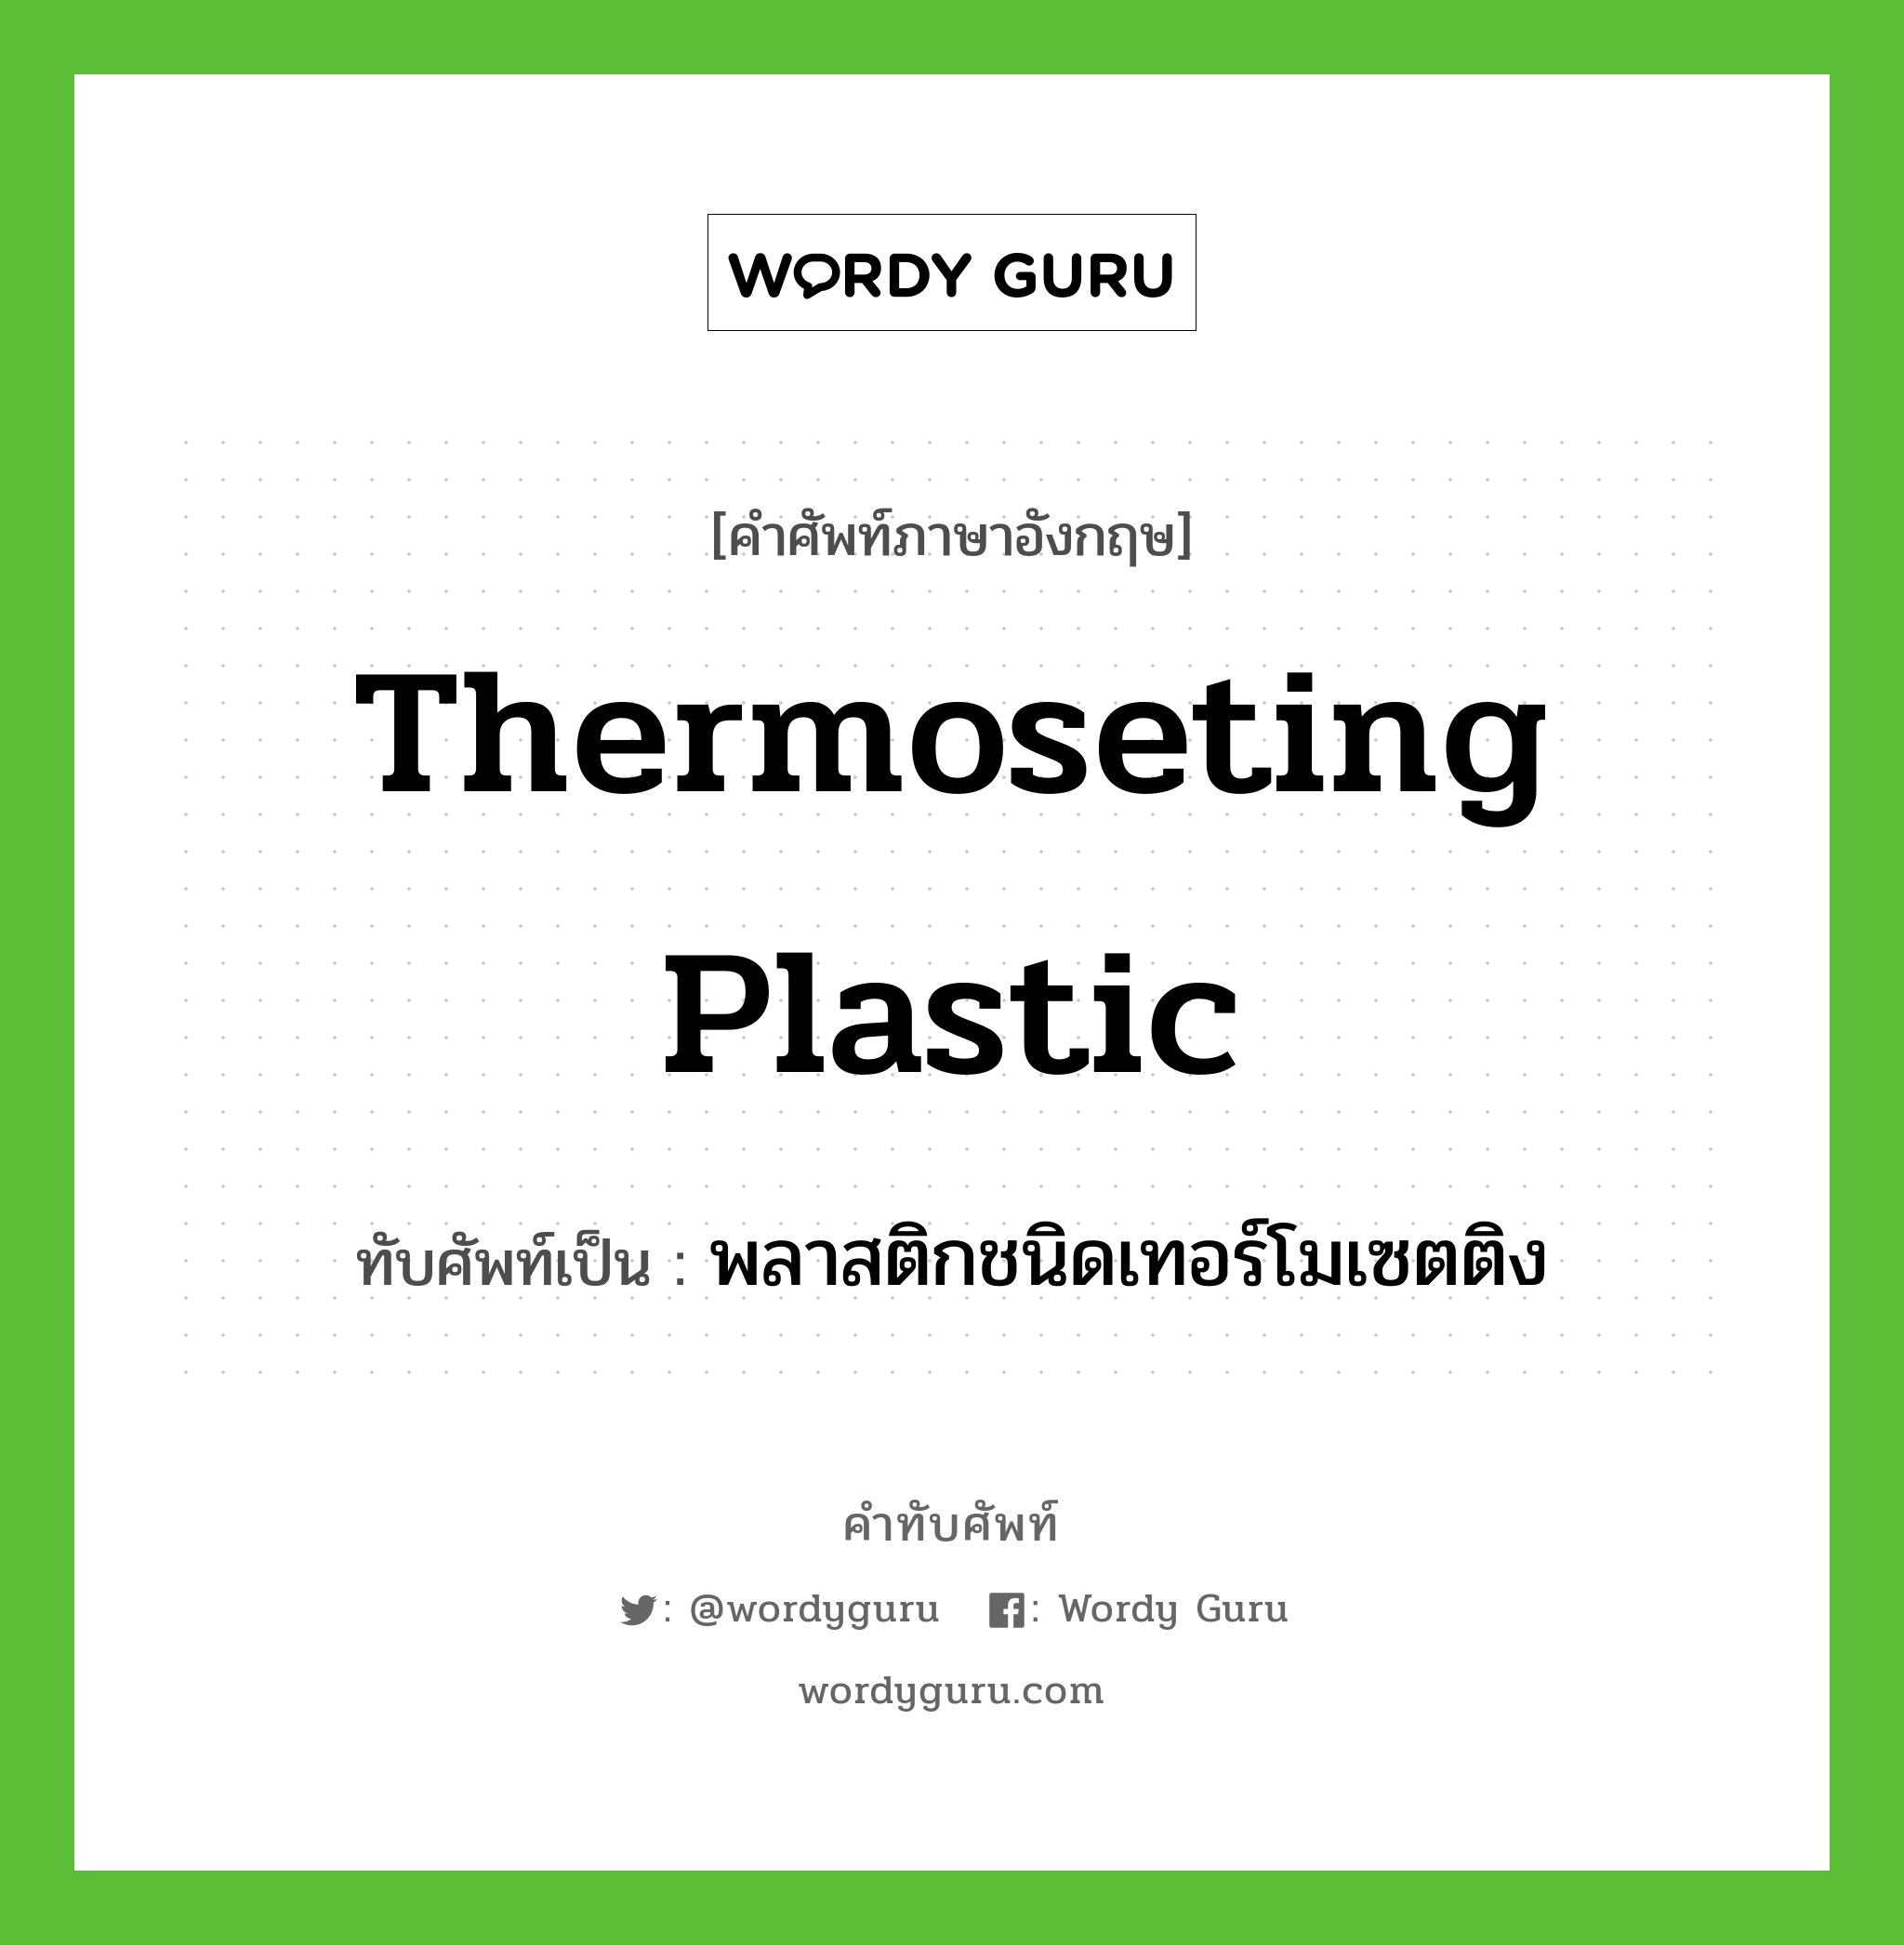 thermoseting plastic เขียนเป็นคำไทยว่าอะไร?, คำศัพท์ภาษาอังกฤษ thermoseting plastic ทับศัพท์เป็น พลาสติกชนิดเทอร์โมเซตติง